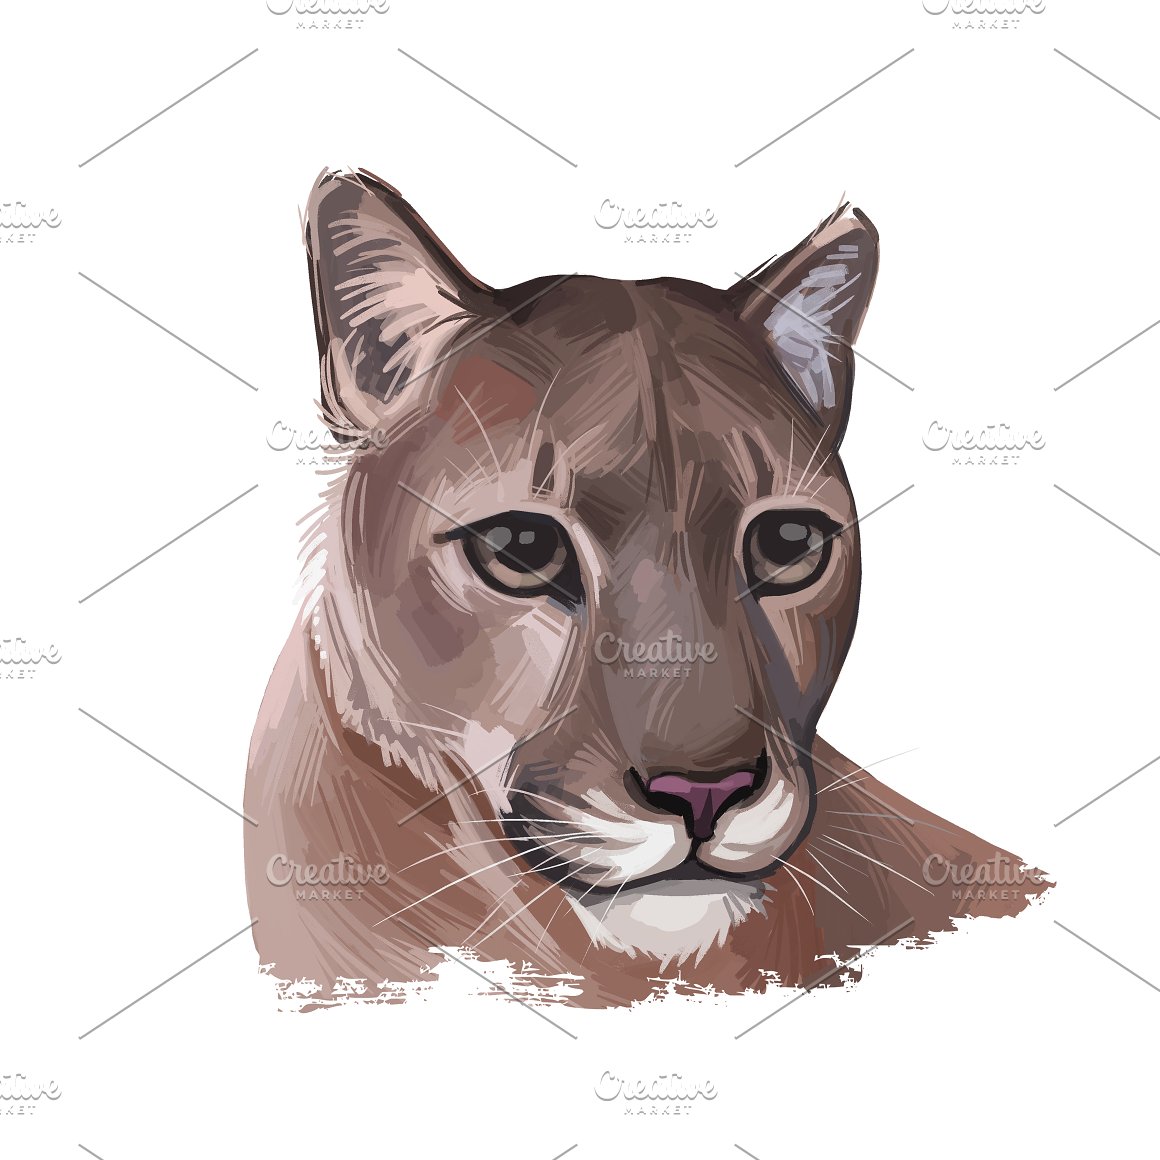 Cougar image.